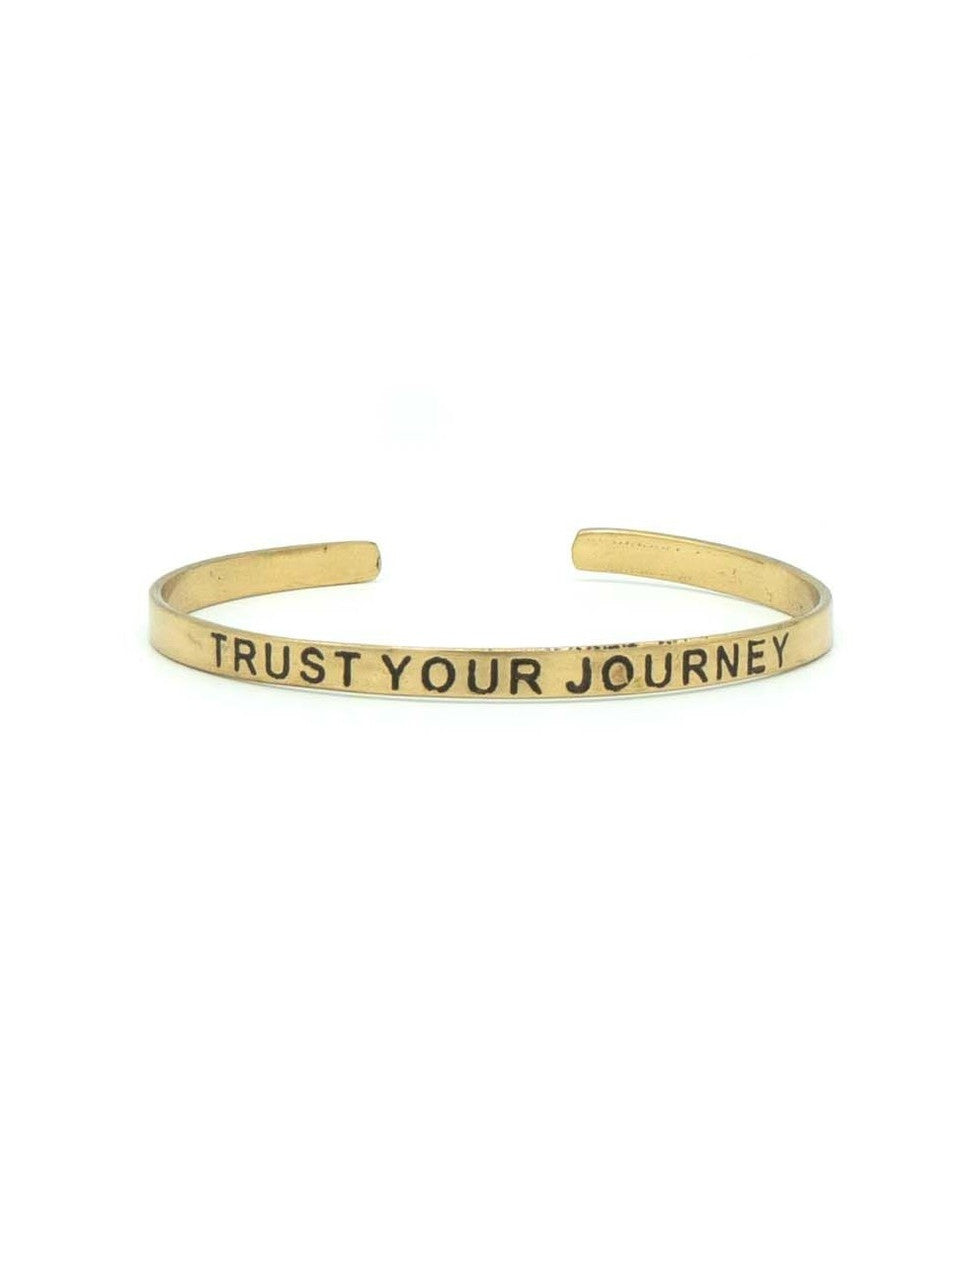 Trust Your Journey Cuff in Brass